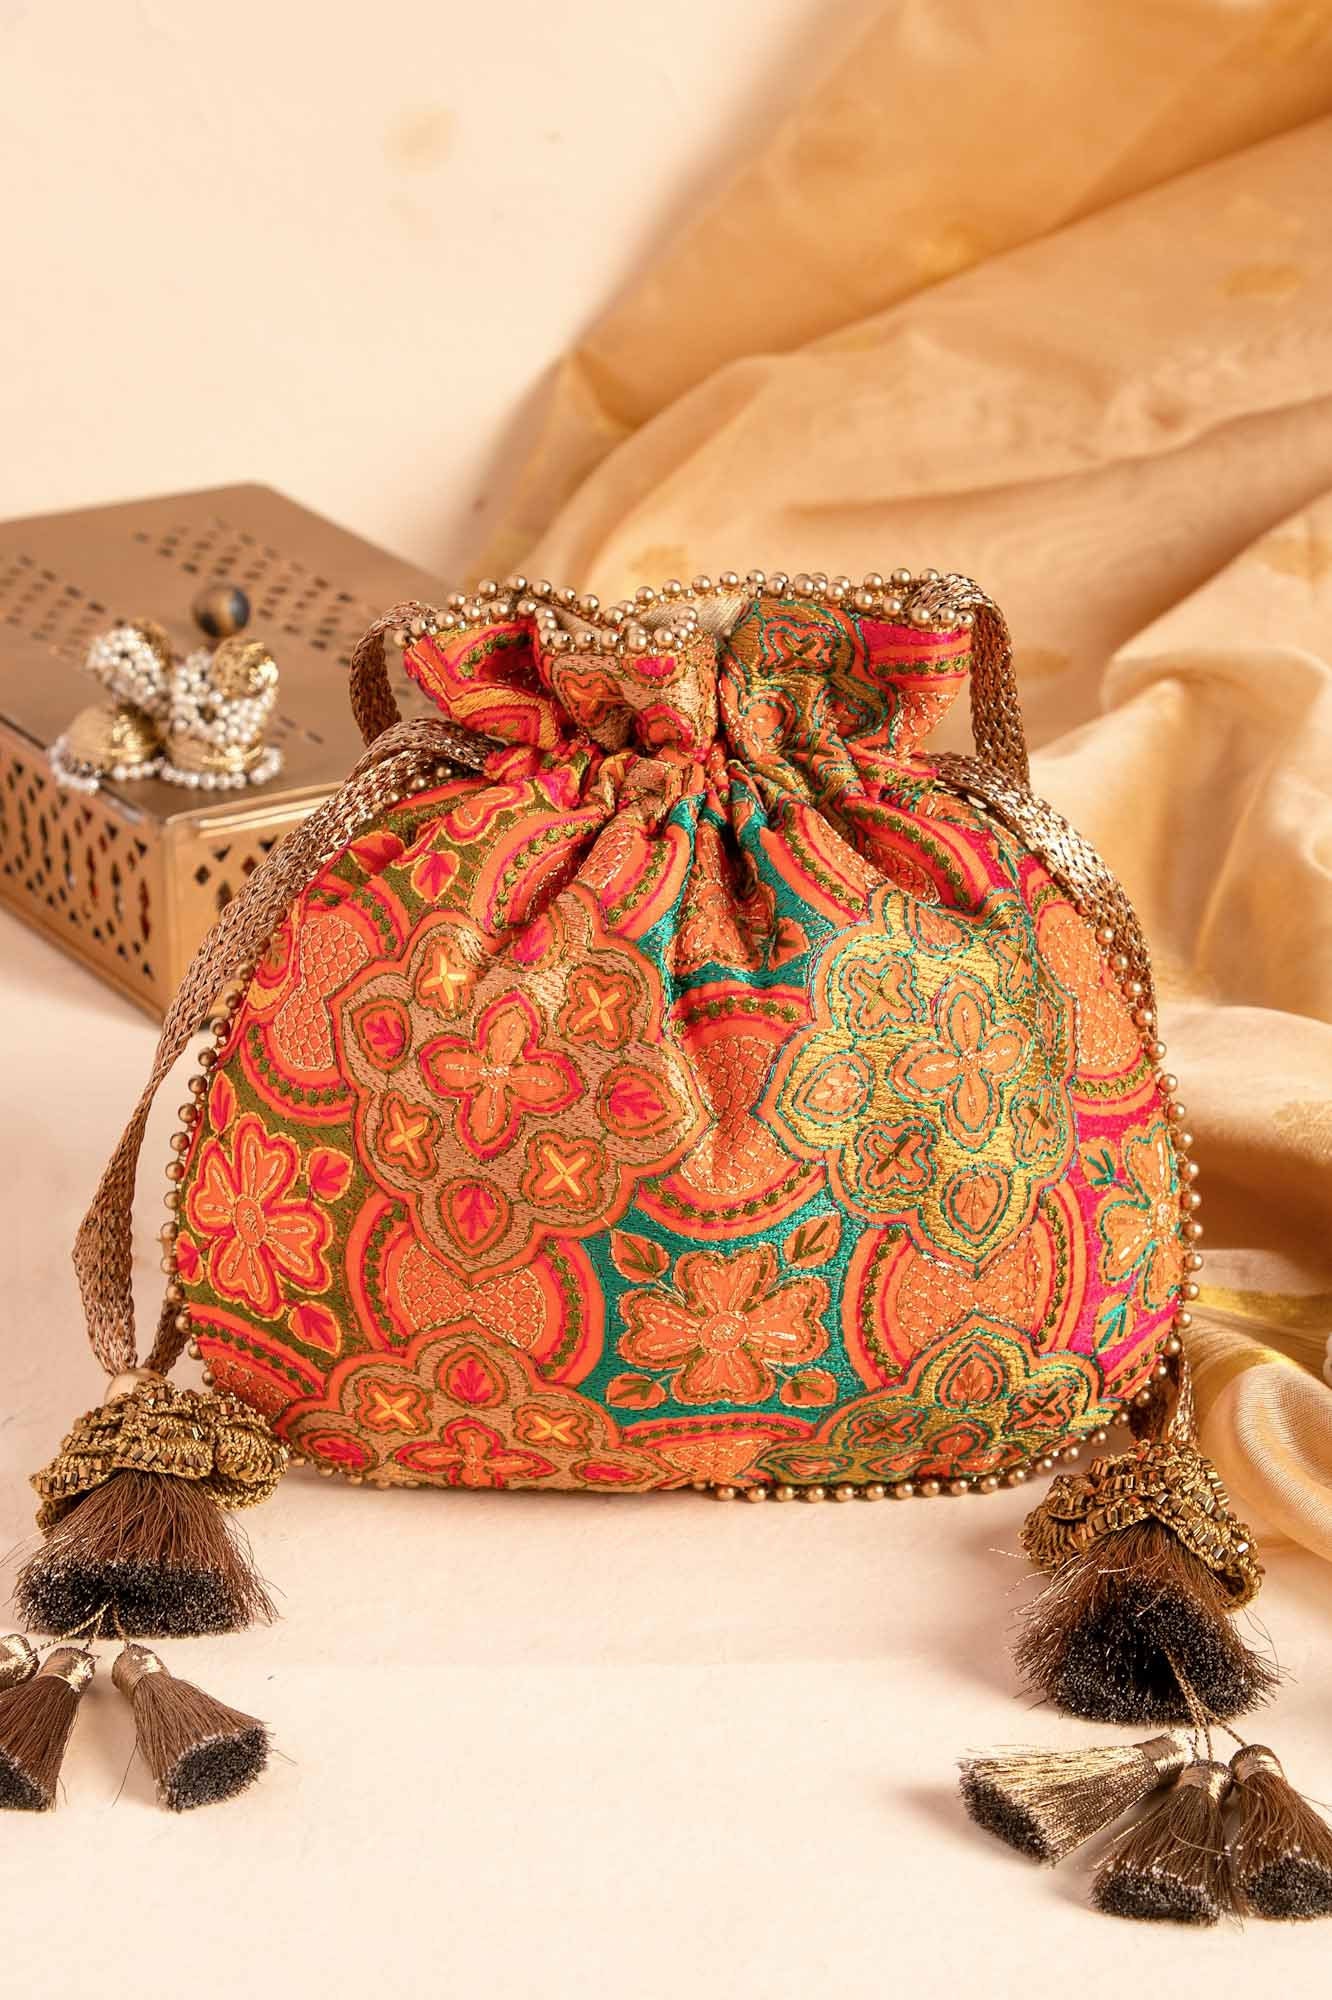 Lot Of 100 Indian Handmade Women's Embroidered Clutch purse Potli Bag Pouch  Drawstring Bag Wedding Favor